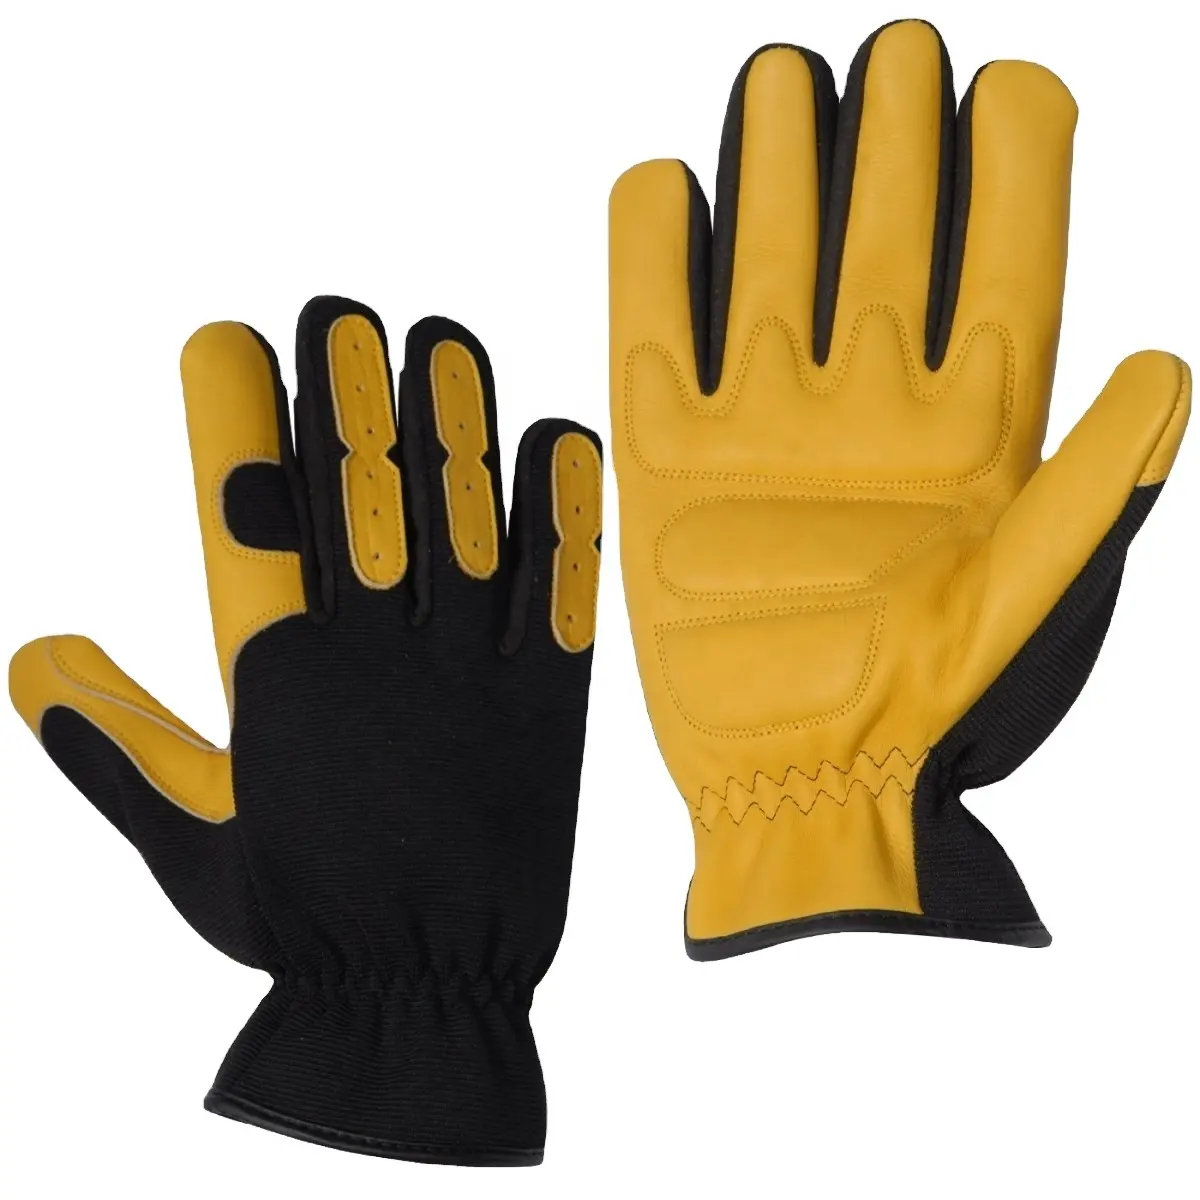 Garden Safety Protection Safety Cut Gardening Industrial Mechanic Gloves Work Gloves Anti-Static Gloves